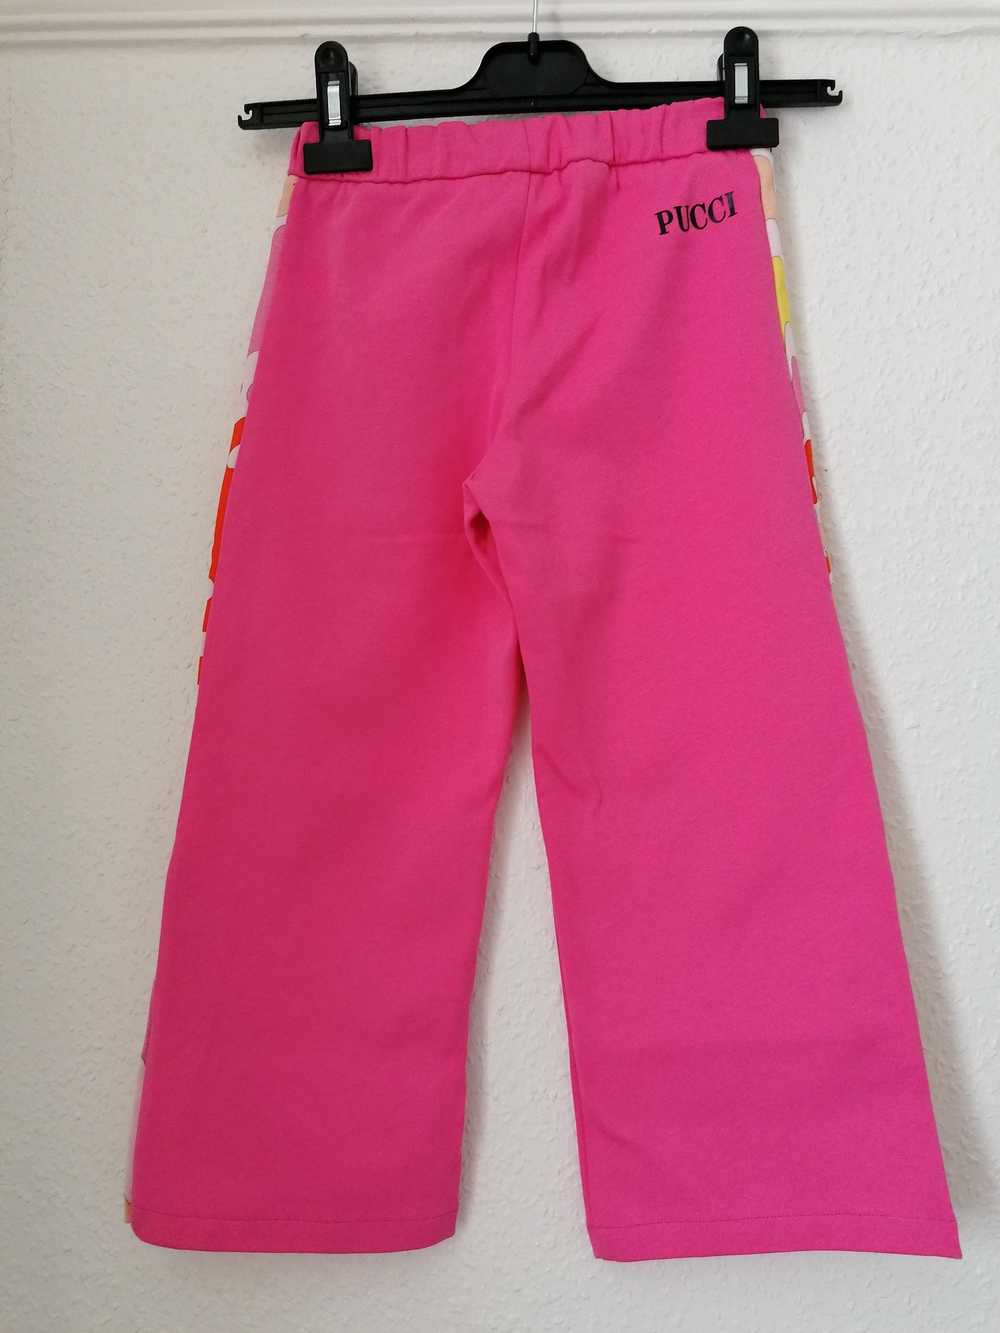 Emilio Pucci Pink cotton printed trim joggers - image 3